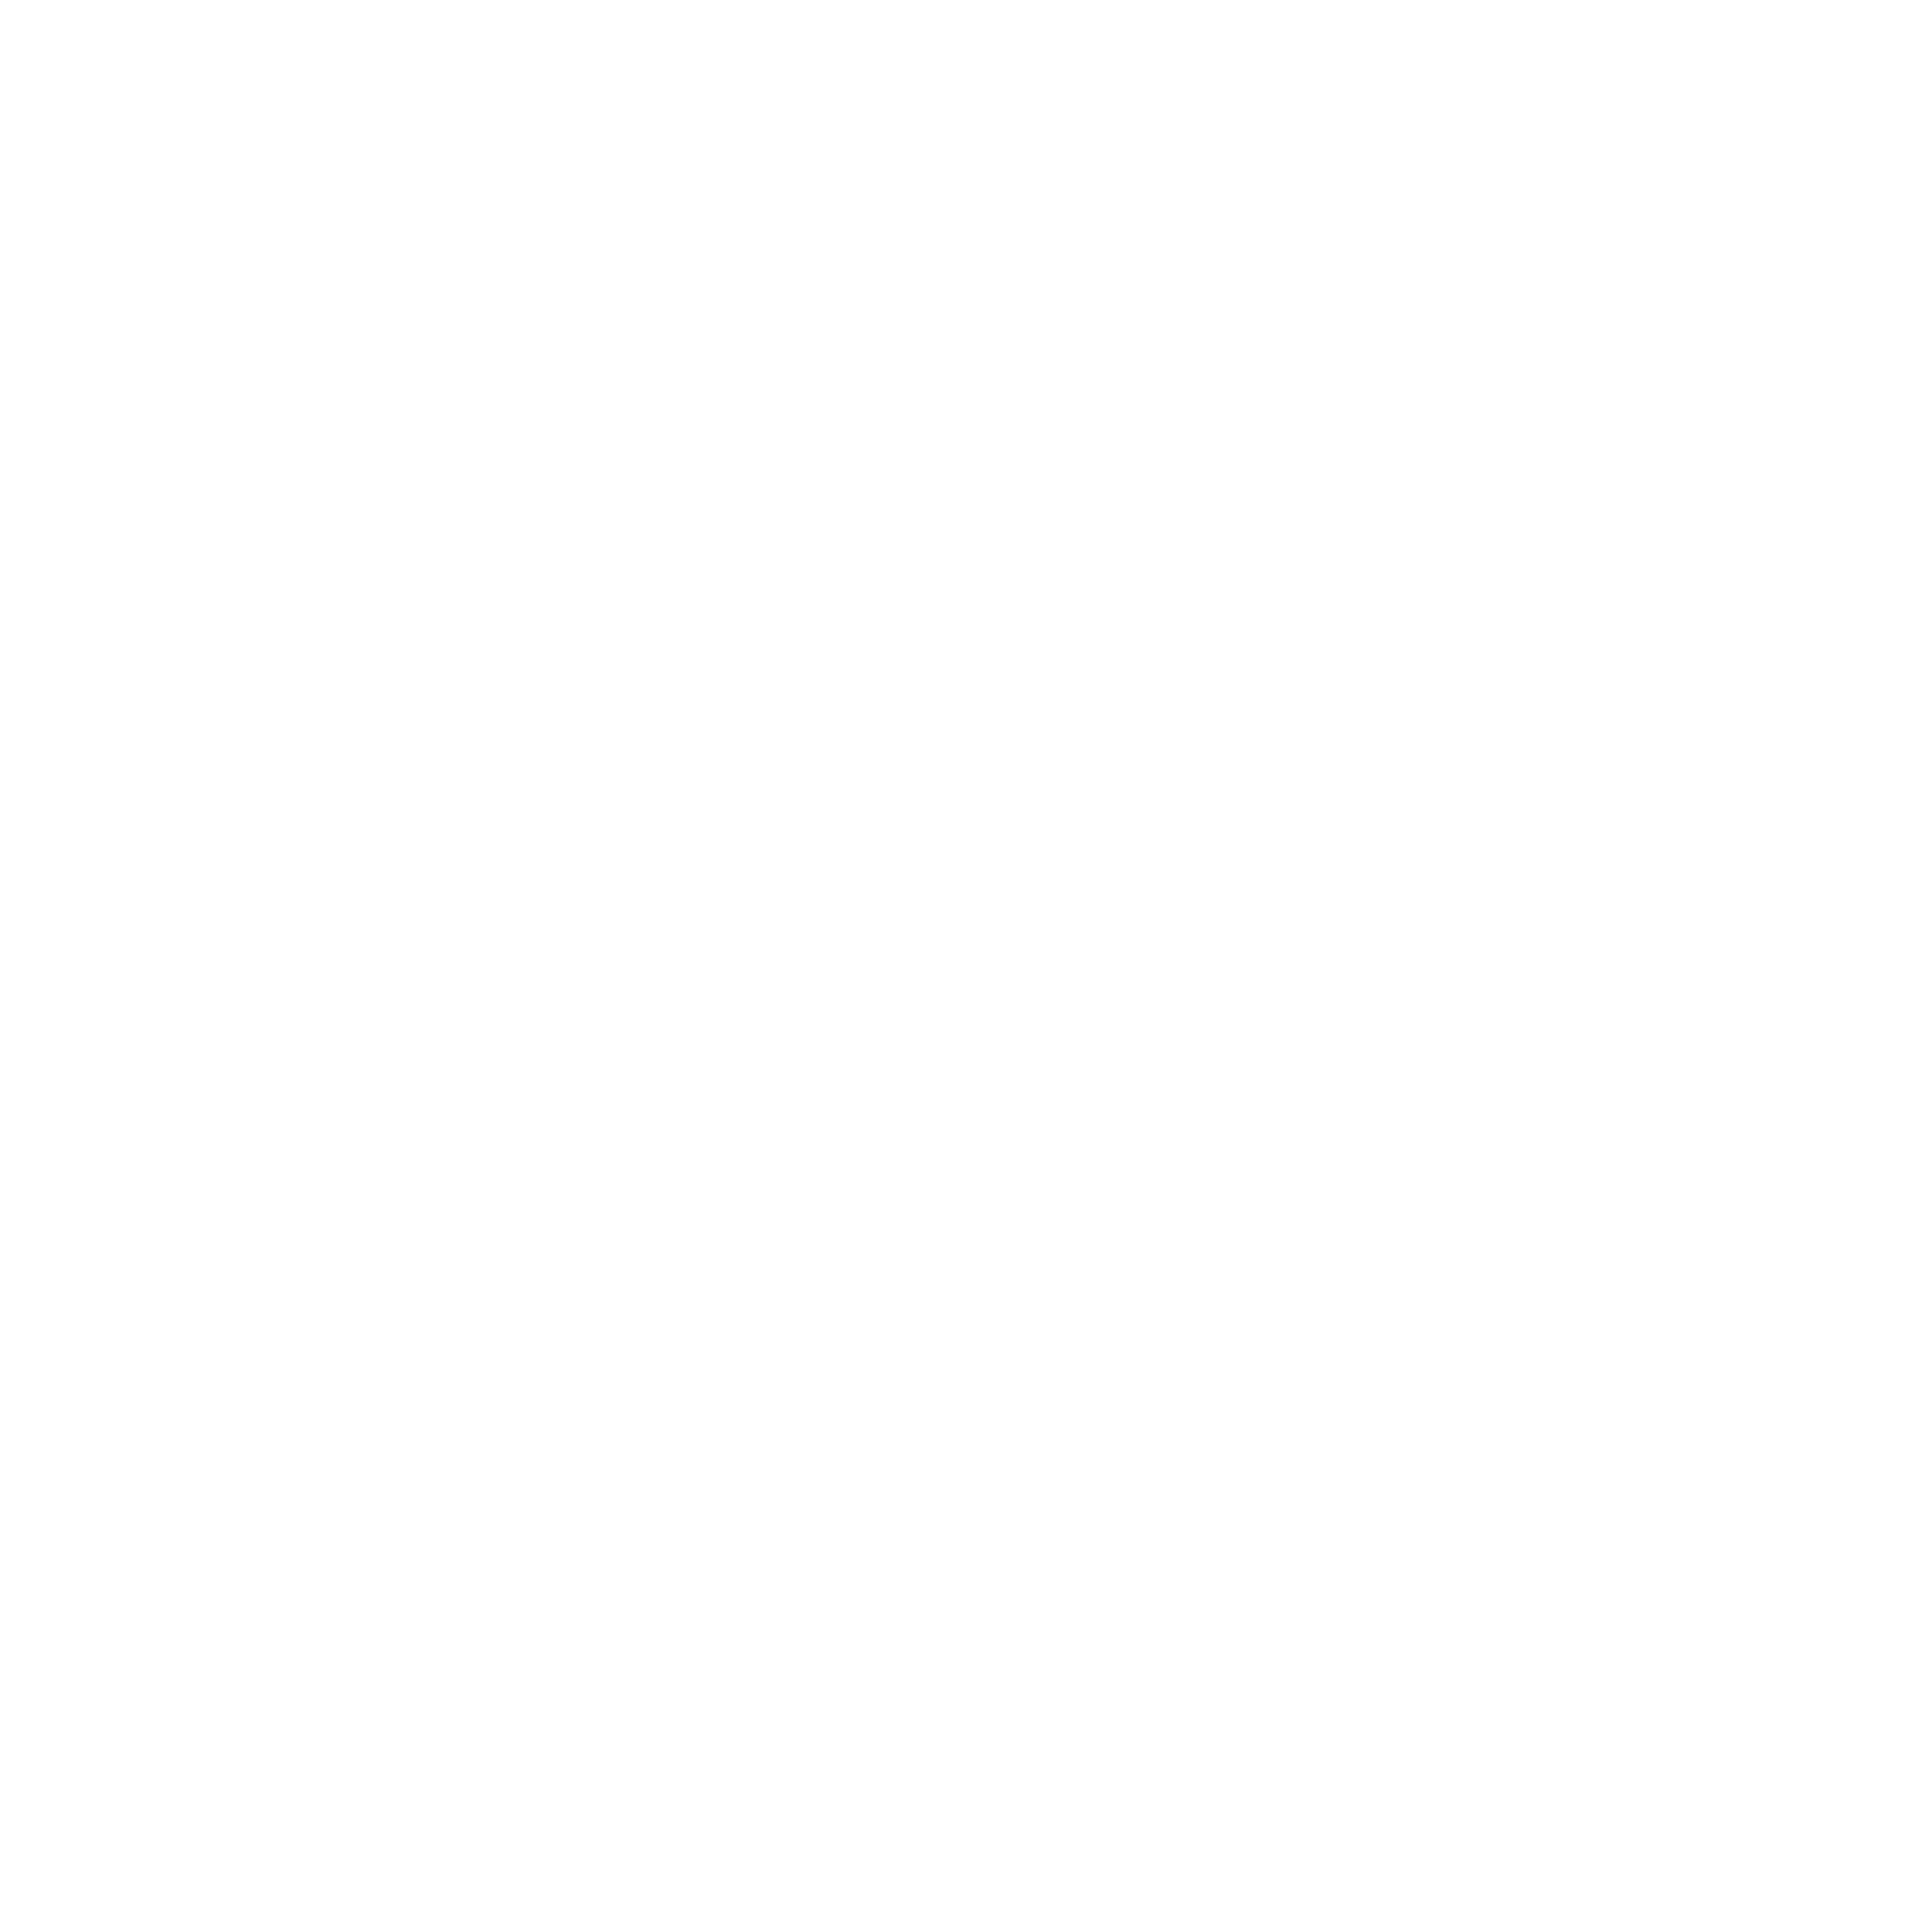 Microsoft Office Excel Logo - Microsoft Office Excel Logo PNG Transparent & SVG Vector